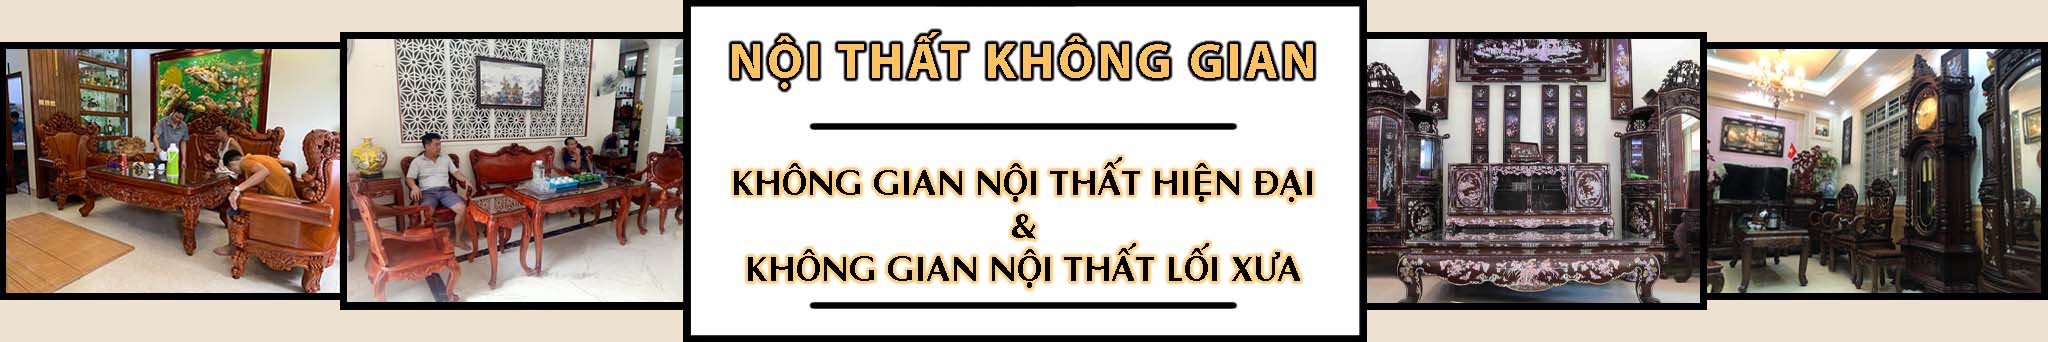 banner-noi-that-khong-gian 3